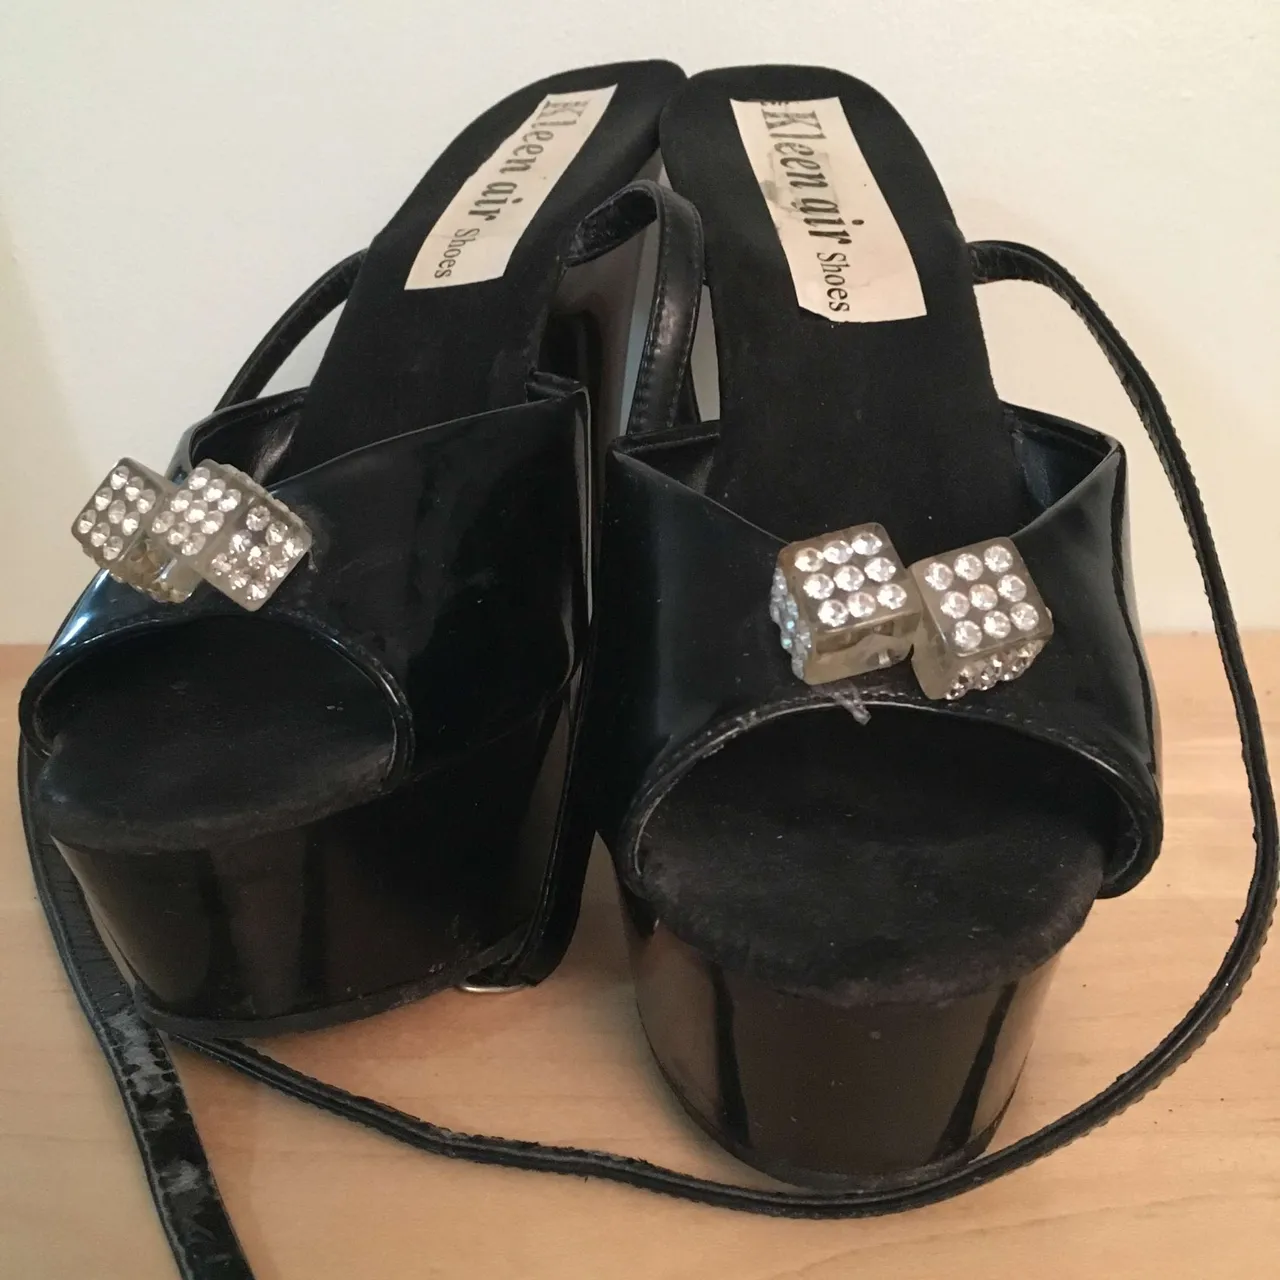 Black platform heels from Kleen Air photo 1